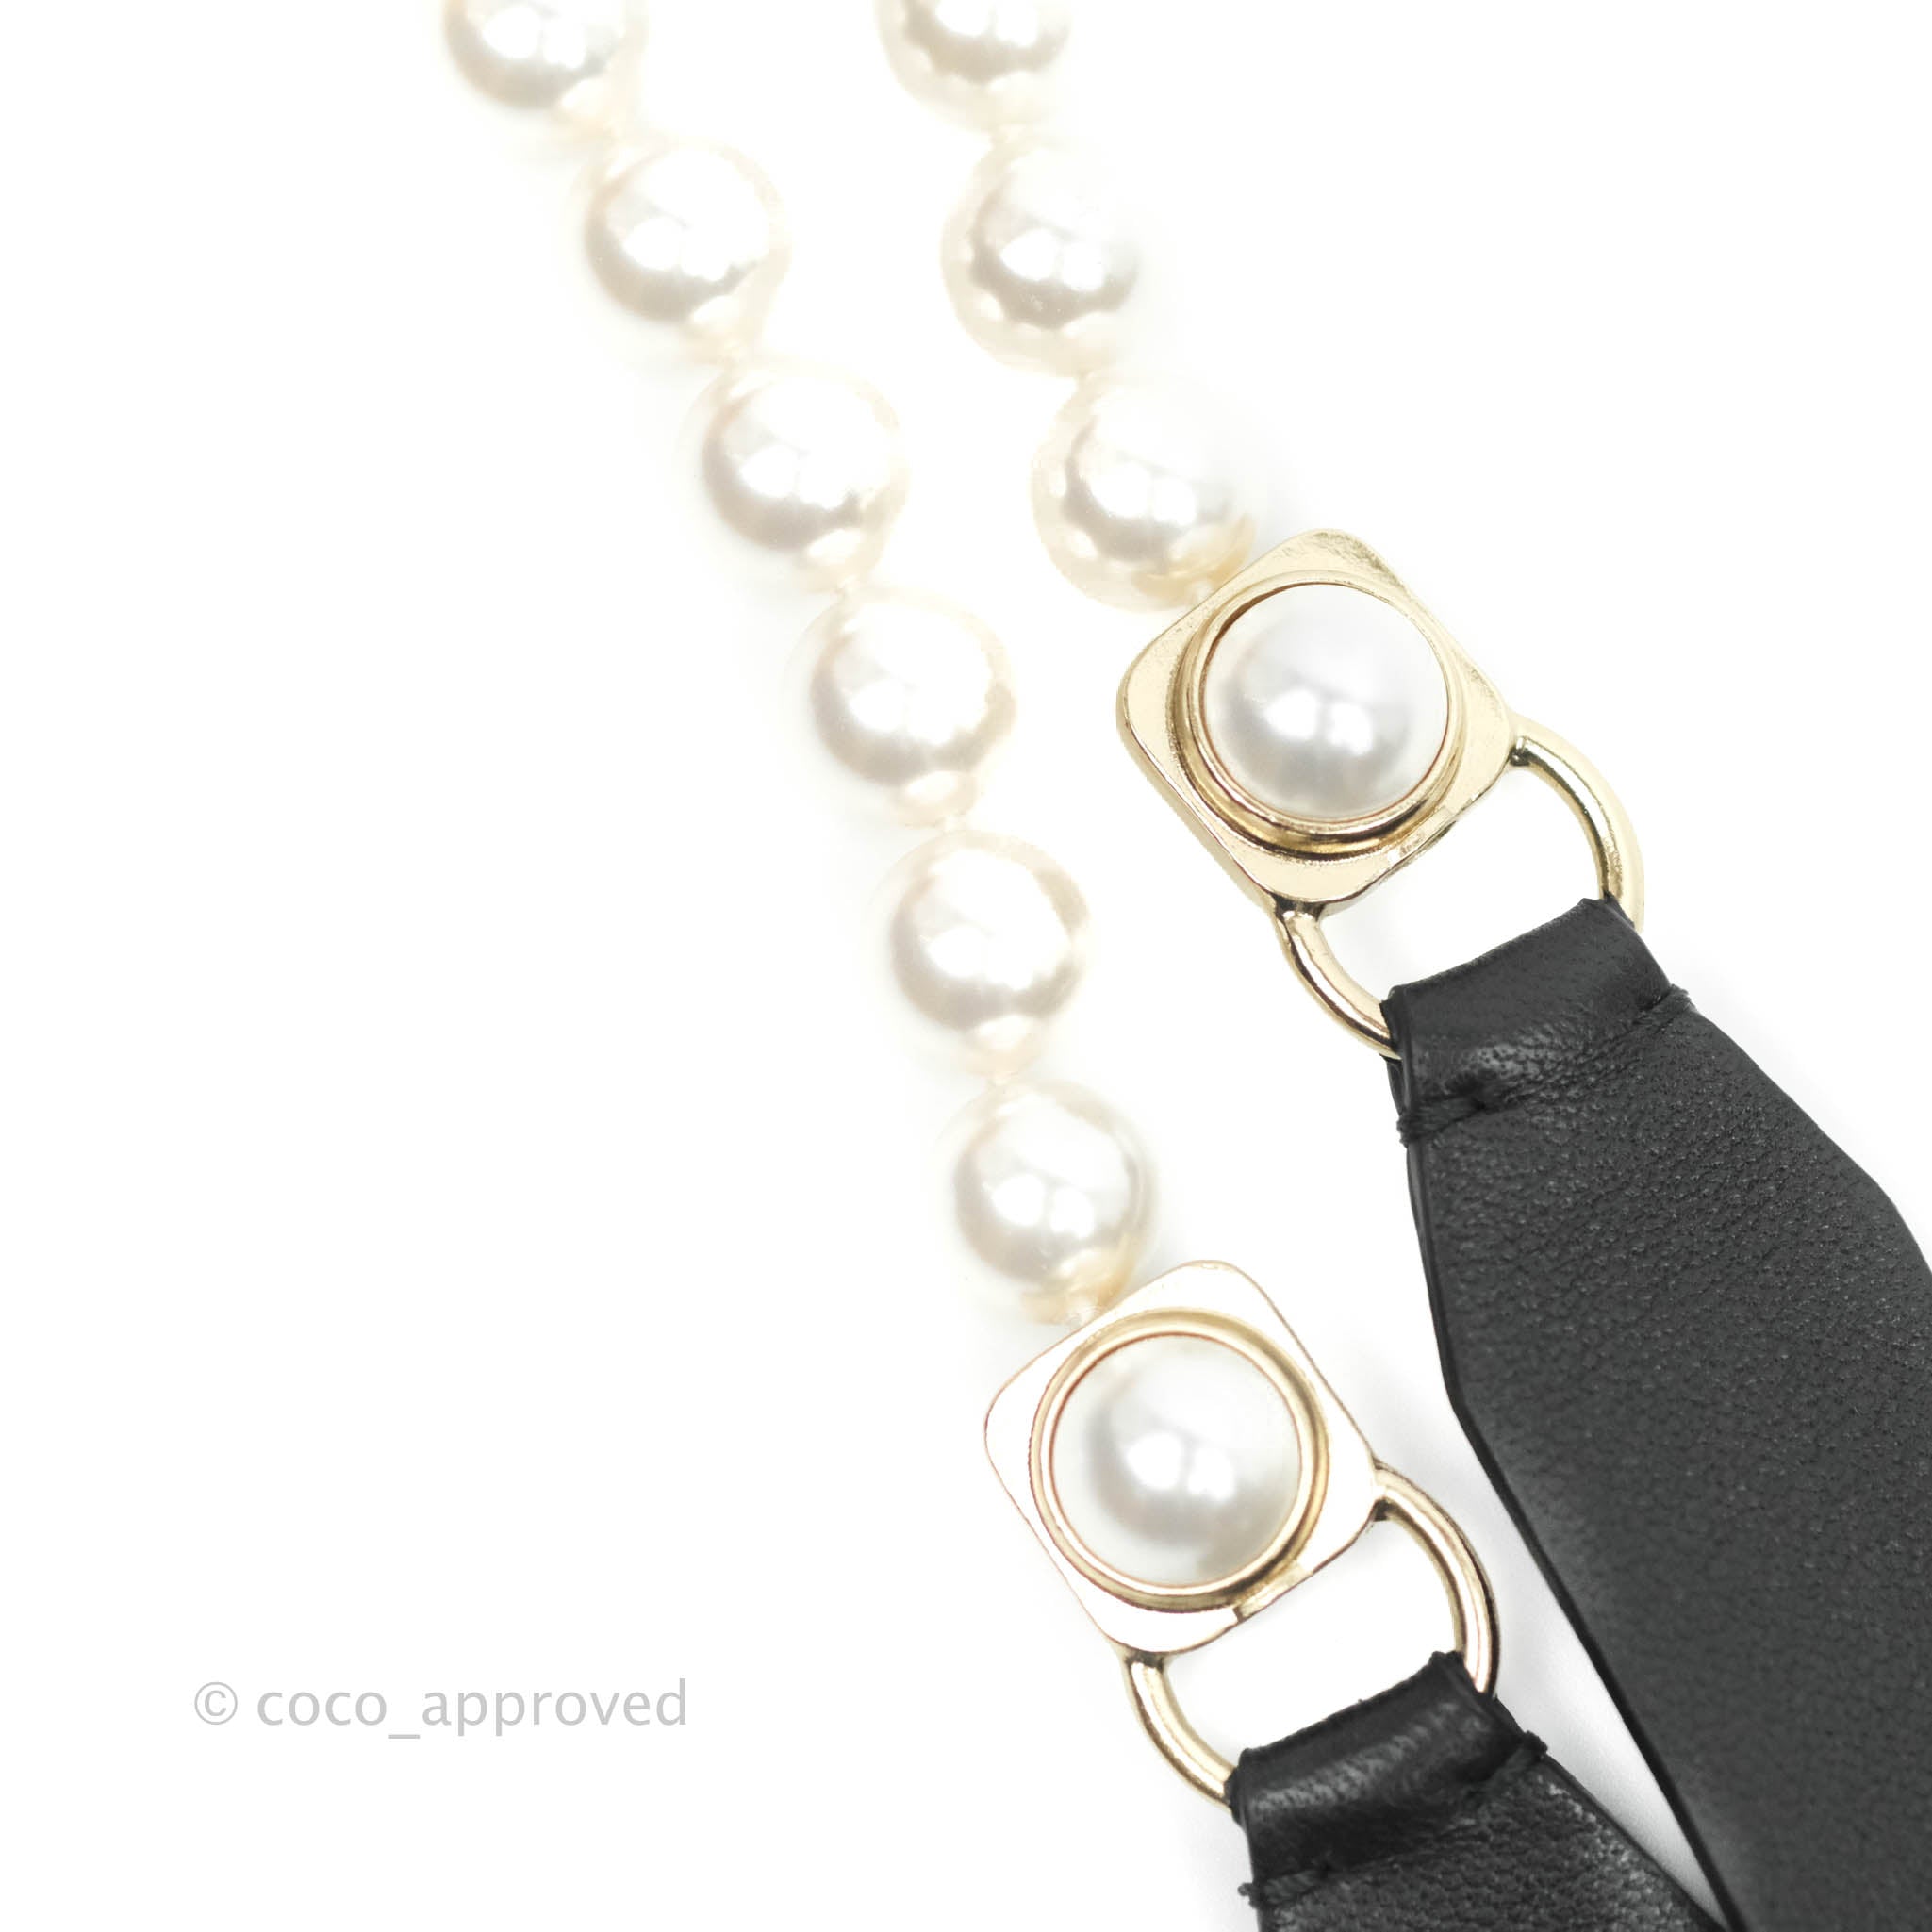 Chanel long pearl Necklace or Belt Shining Gold CC – LLBazar